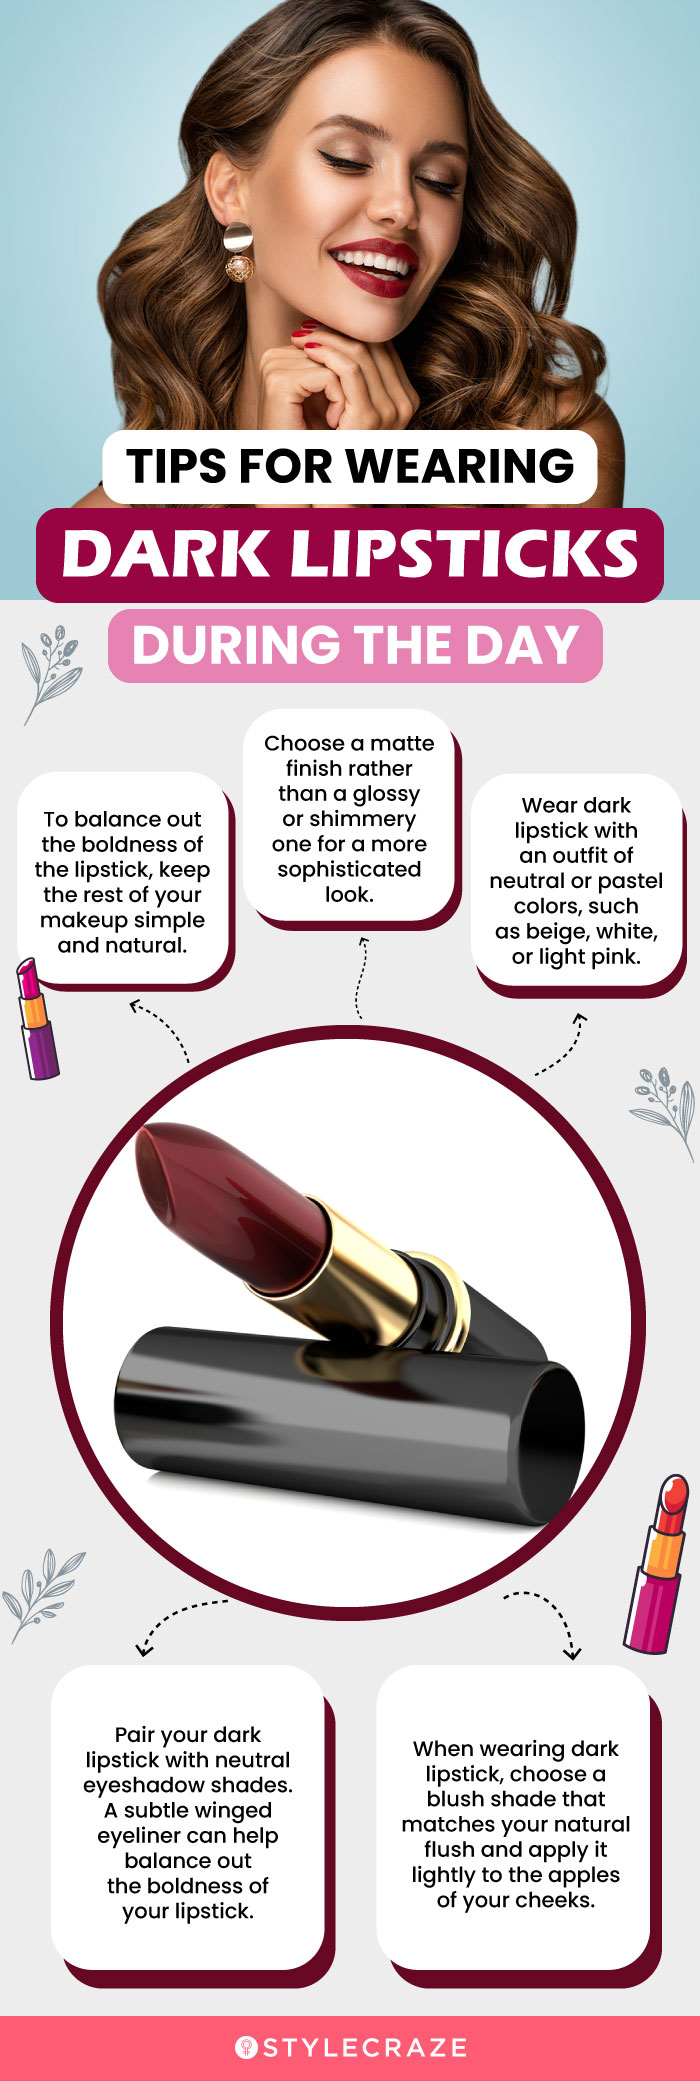 Tips For Wearing Dark Lipstick (infographic)